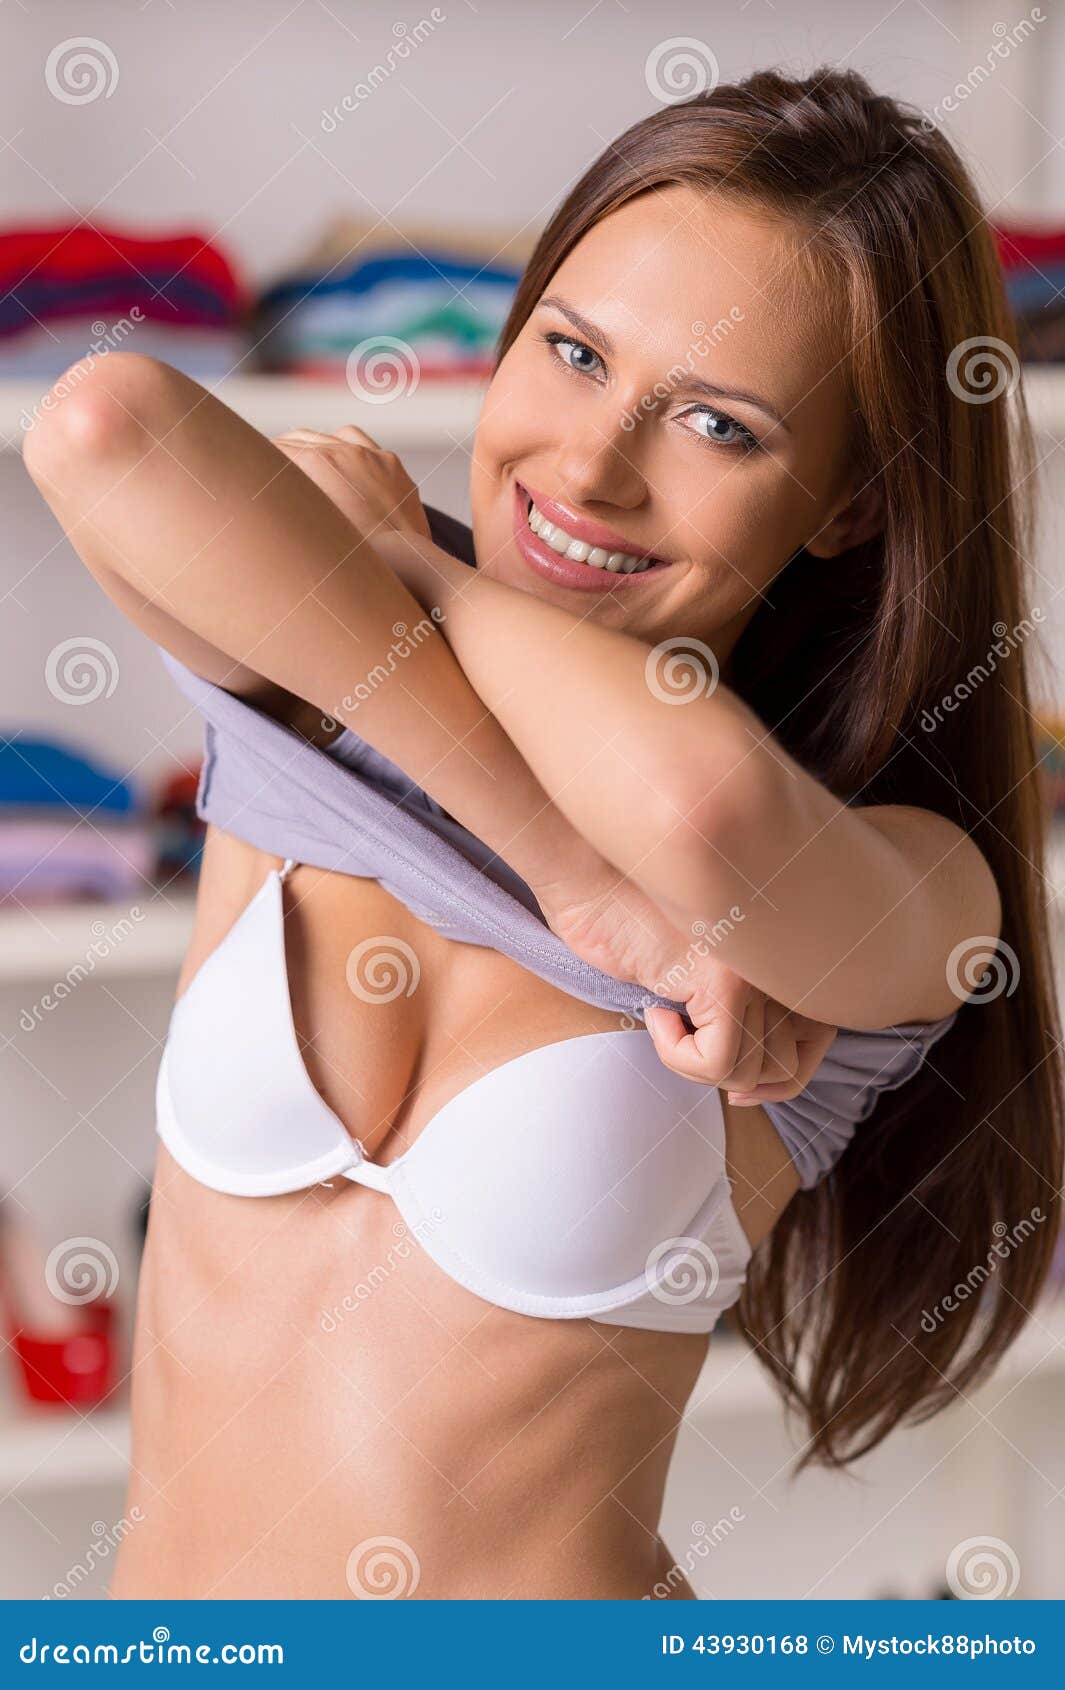 Women taking off their shirts